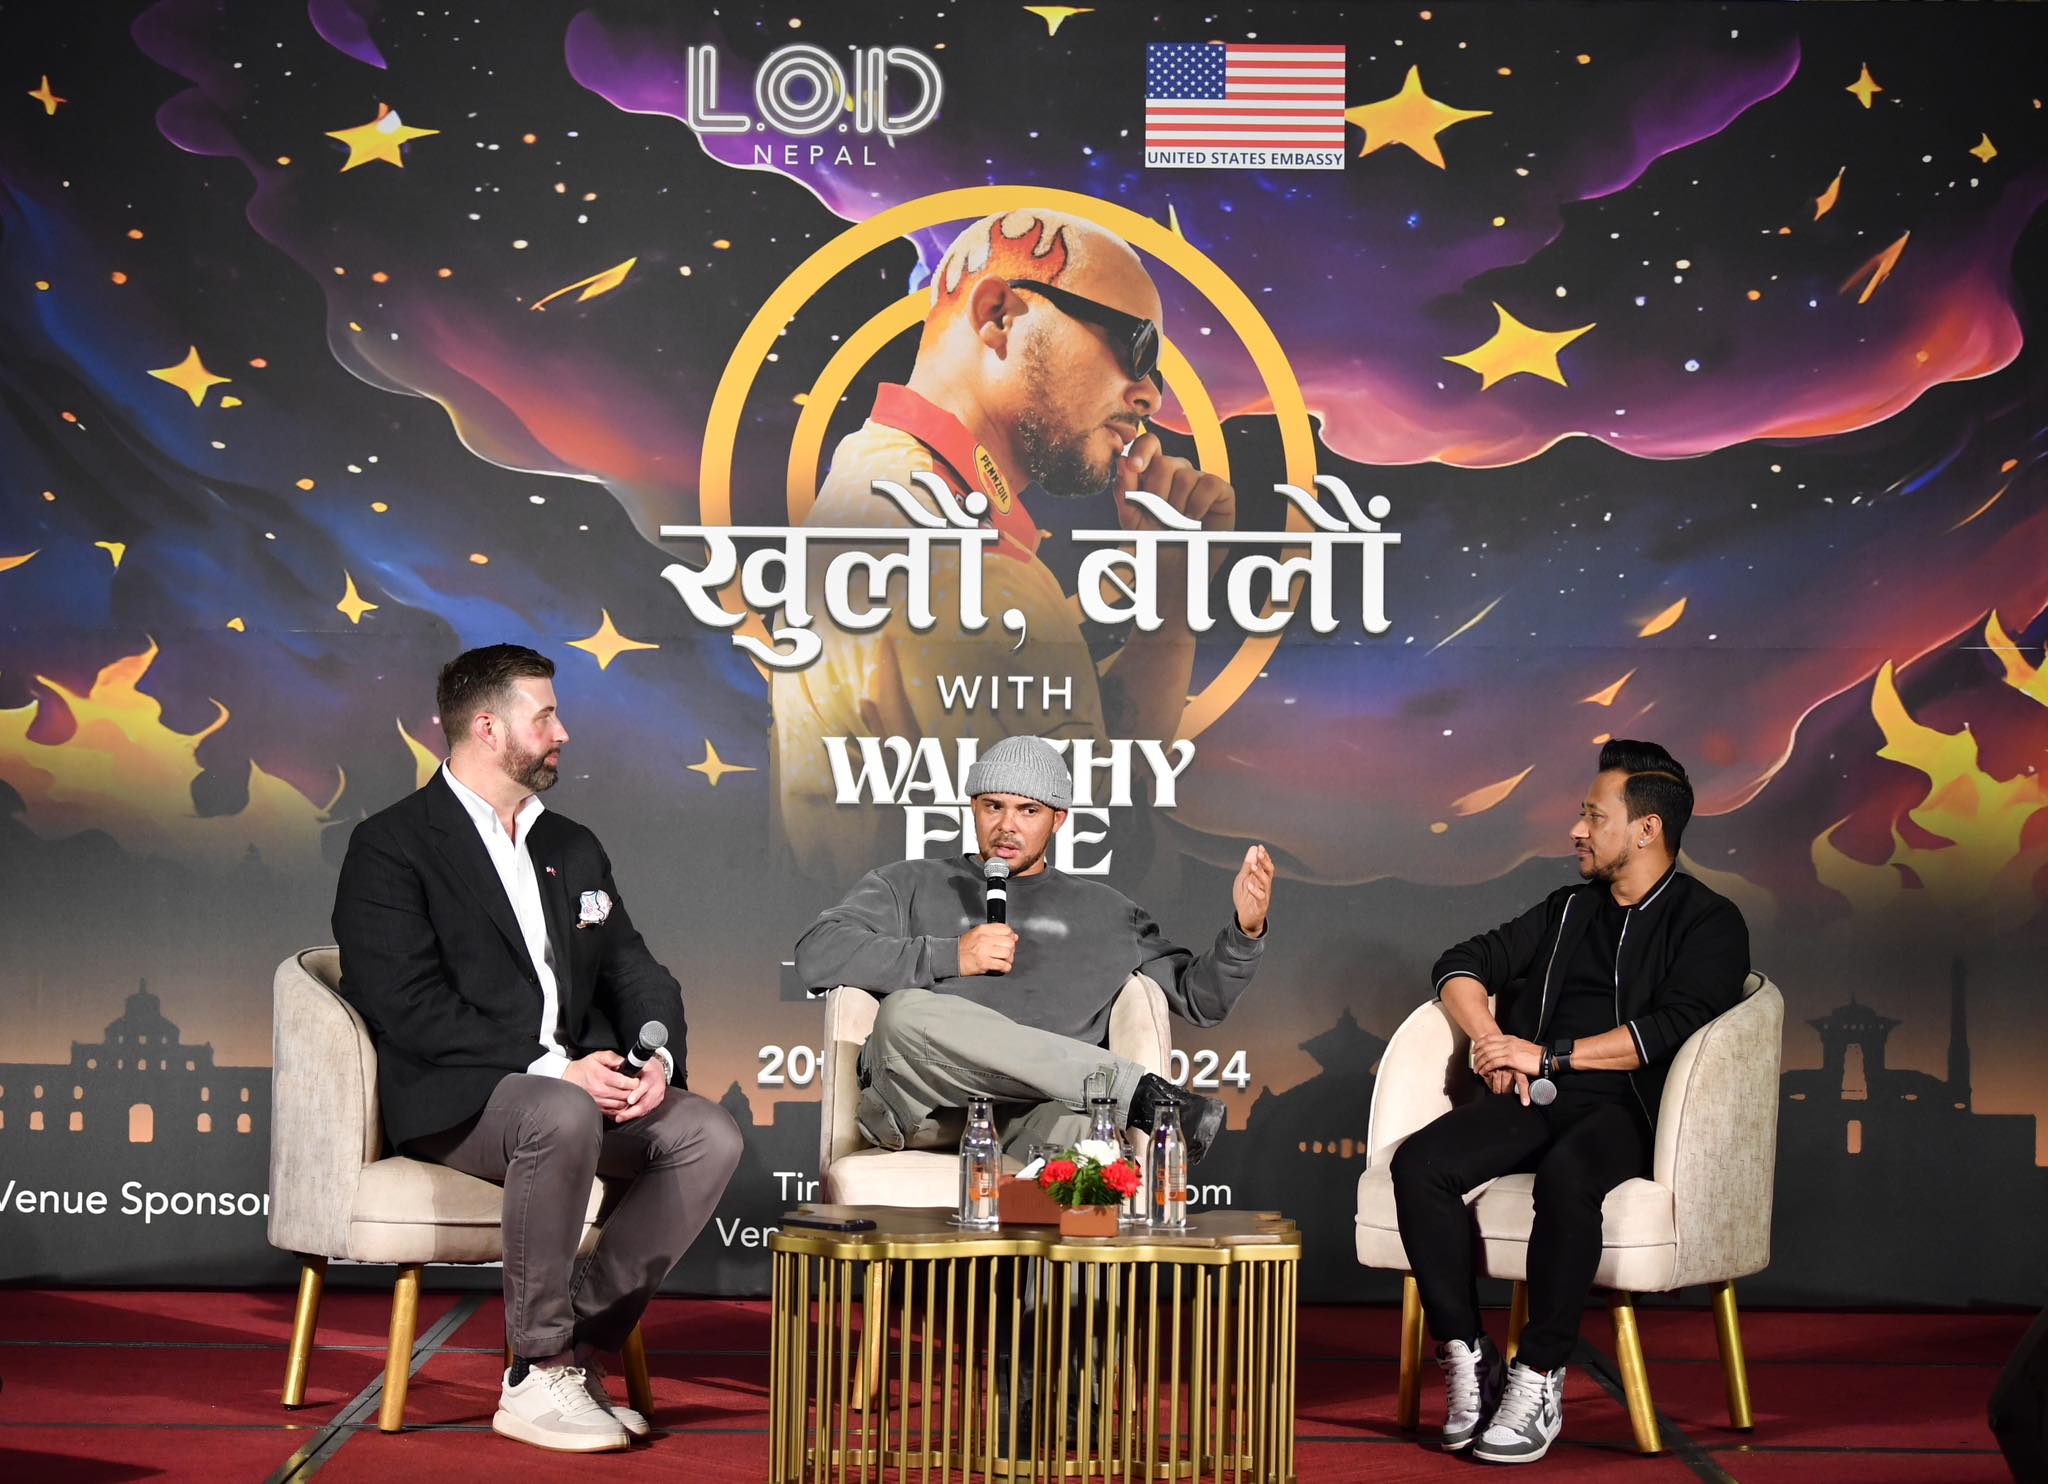 American DJ Walshy Fire attends an inspiring talk program ahead of live performance in Nepal